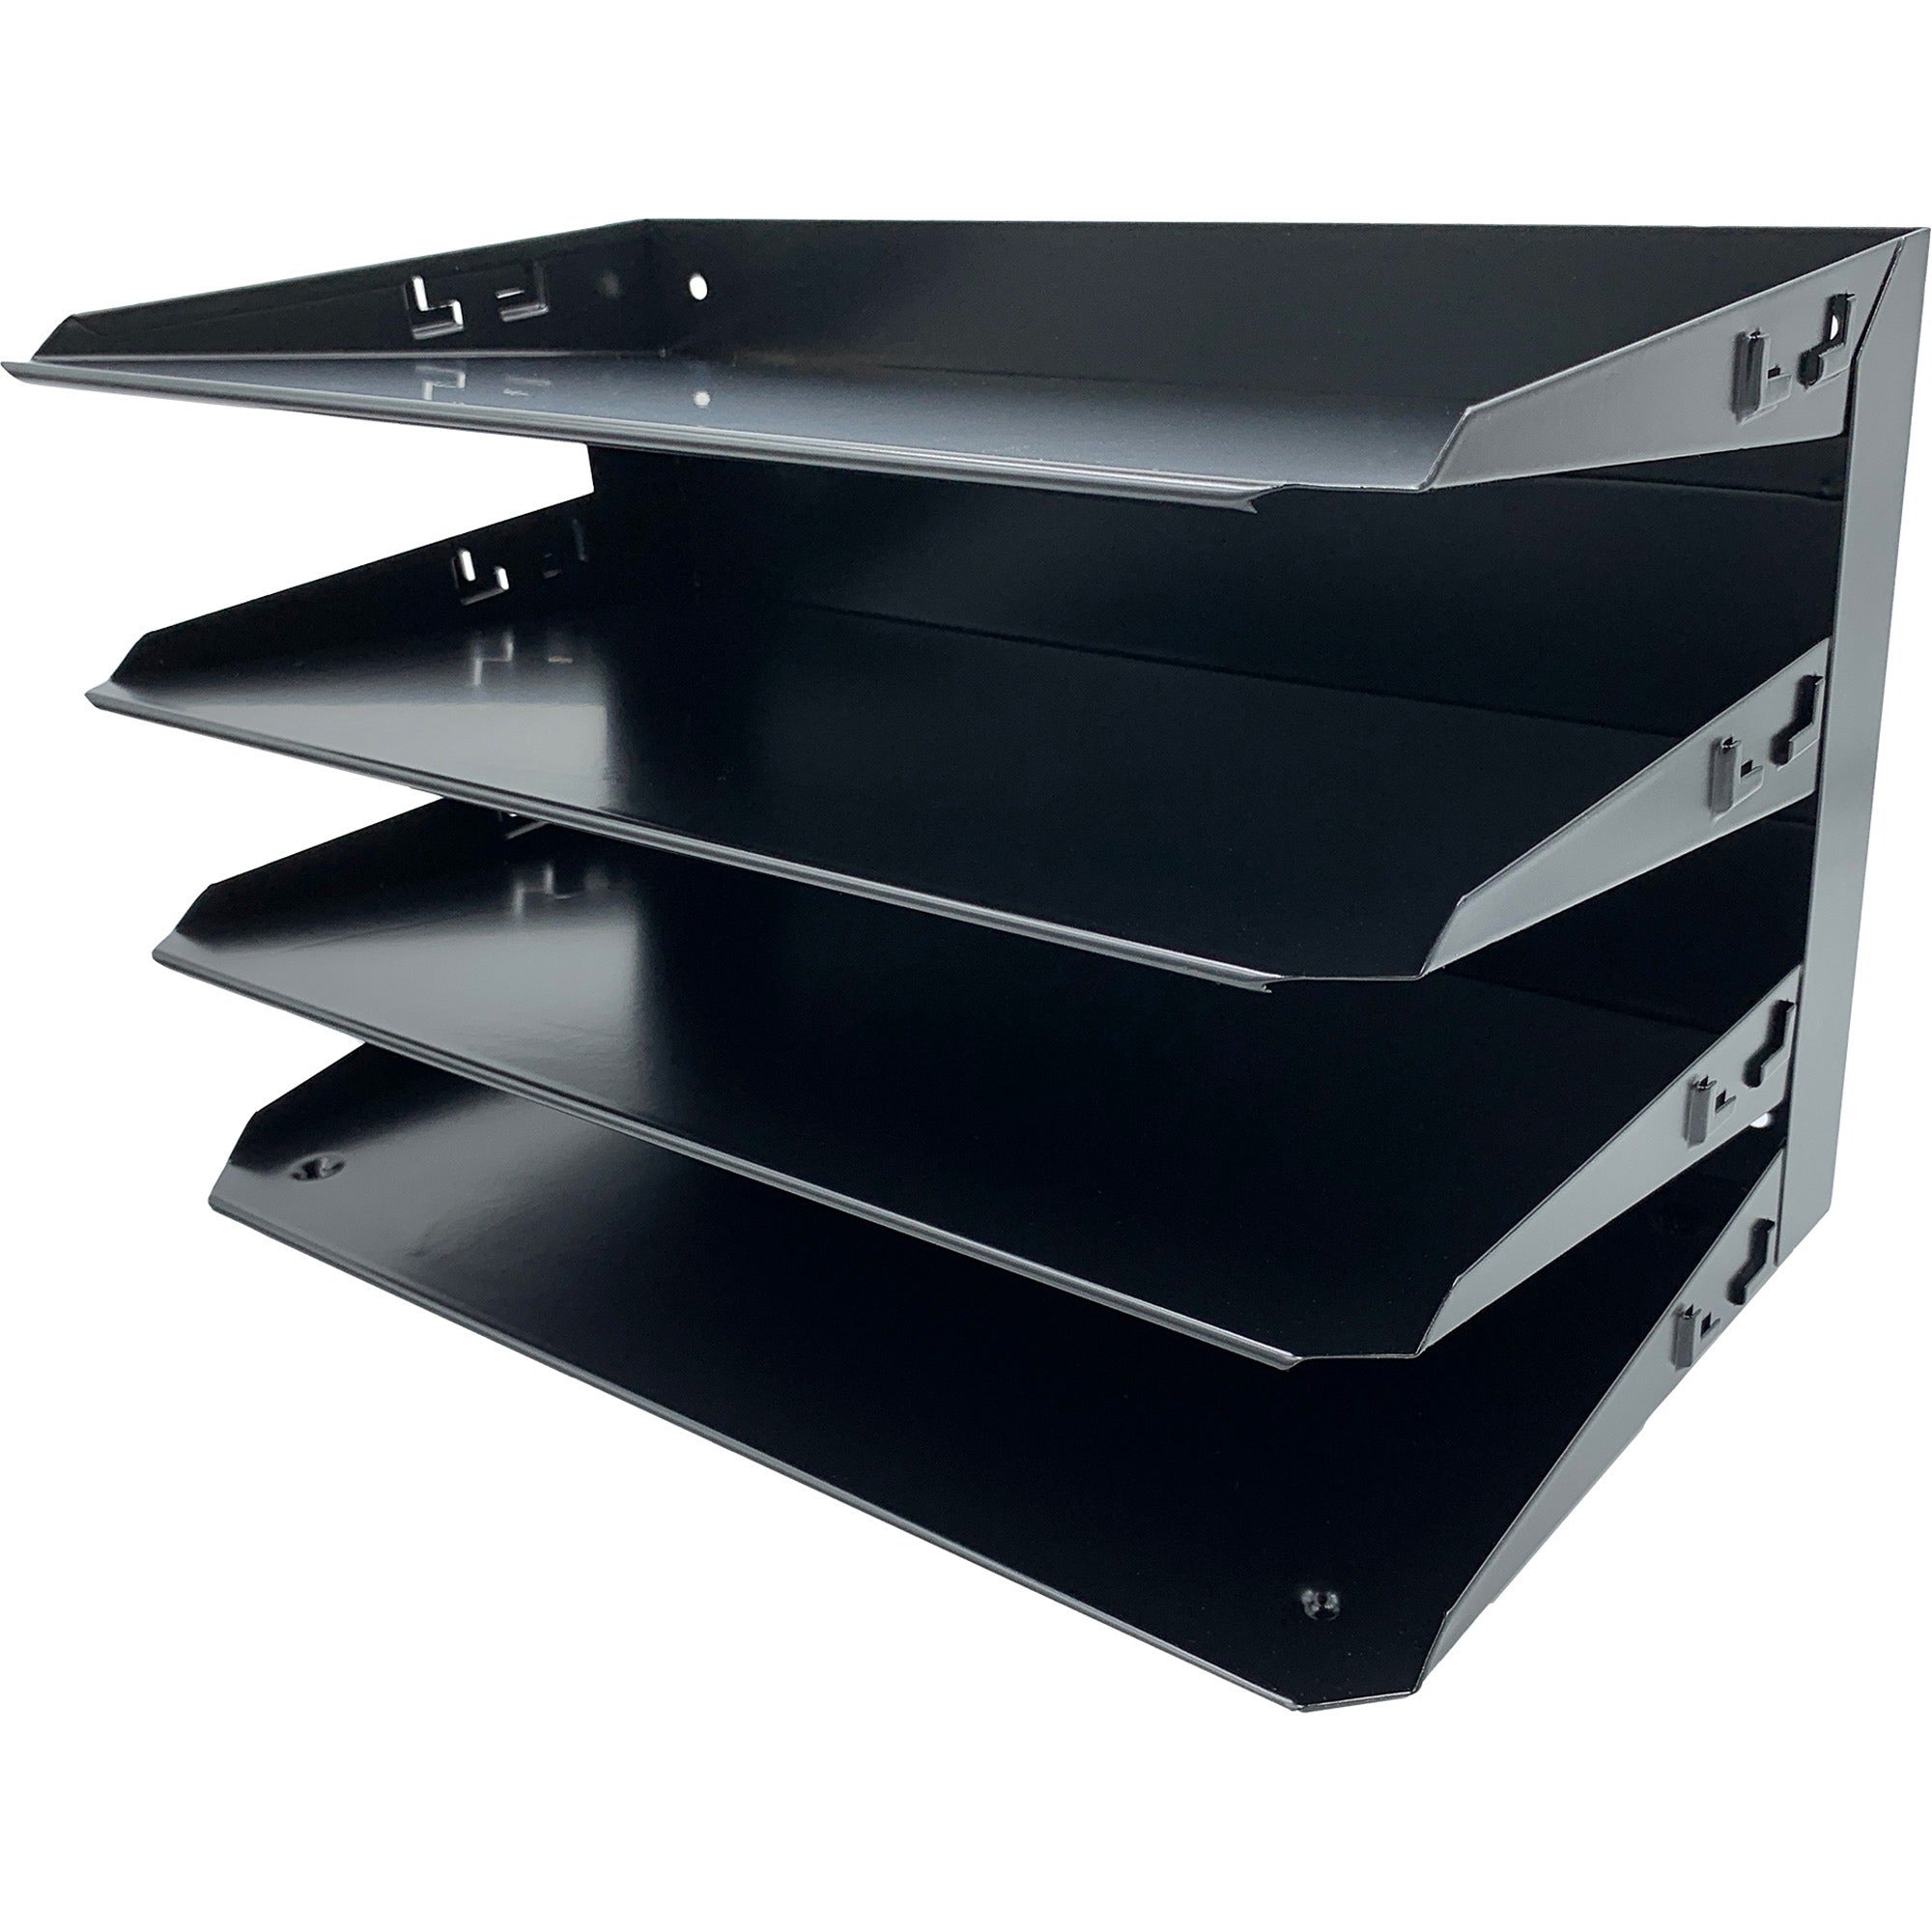 huron-horizontal-slots-desk-organizer-4-compartments-horizontal-15-height-x-93-width-x-86-depth-durable-black-steel-1-each_hurhasz0151 - 1